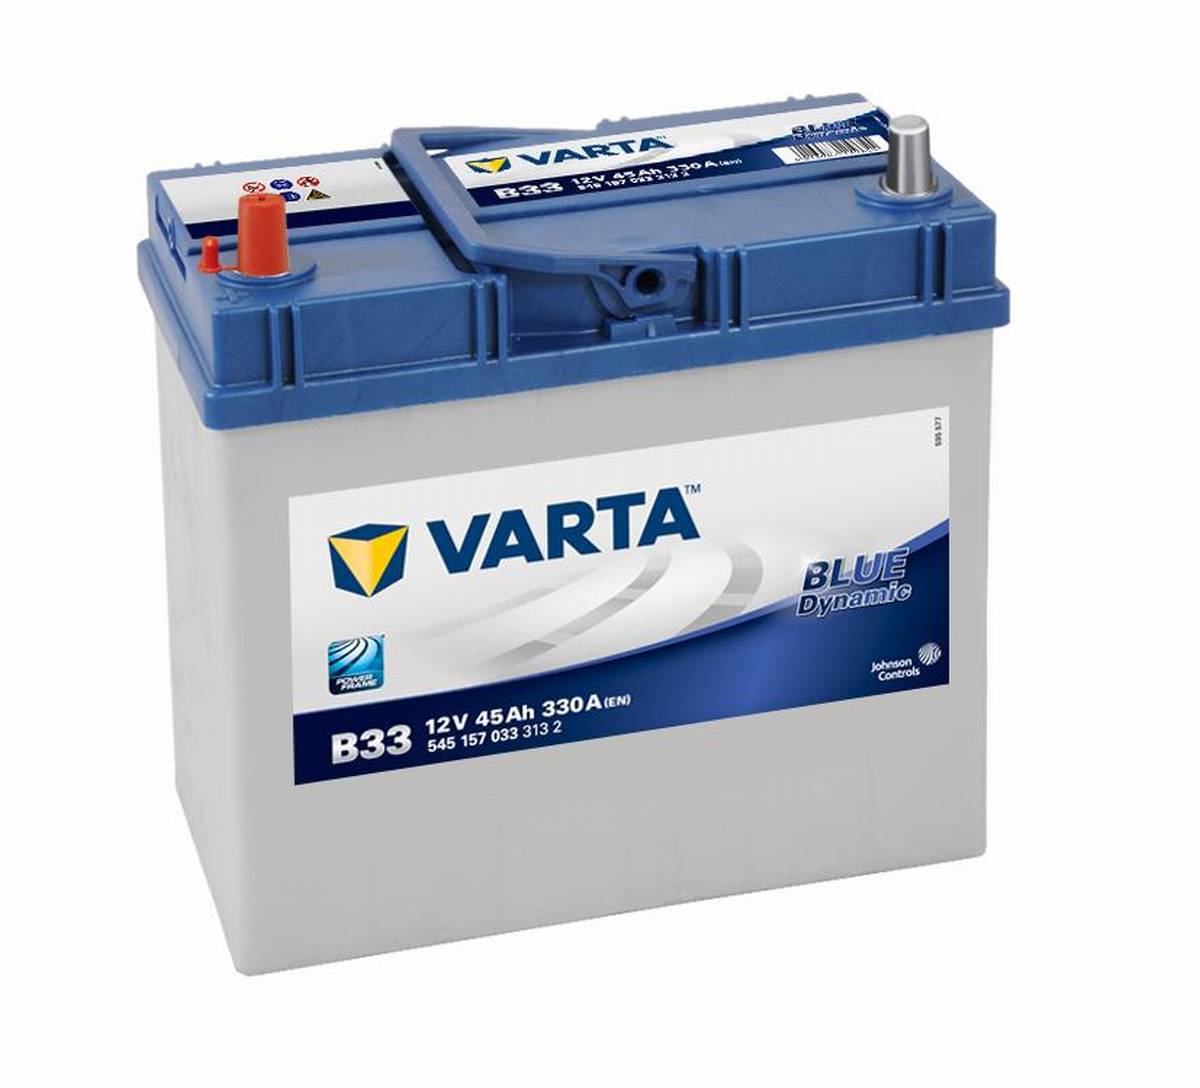 VARTA B33 Blue Dynamic 12V 45Ah 330A Batteria auto 545 157 033